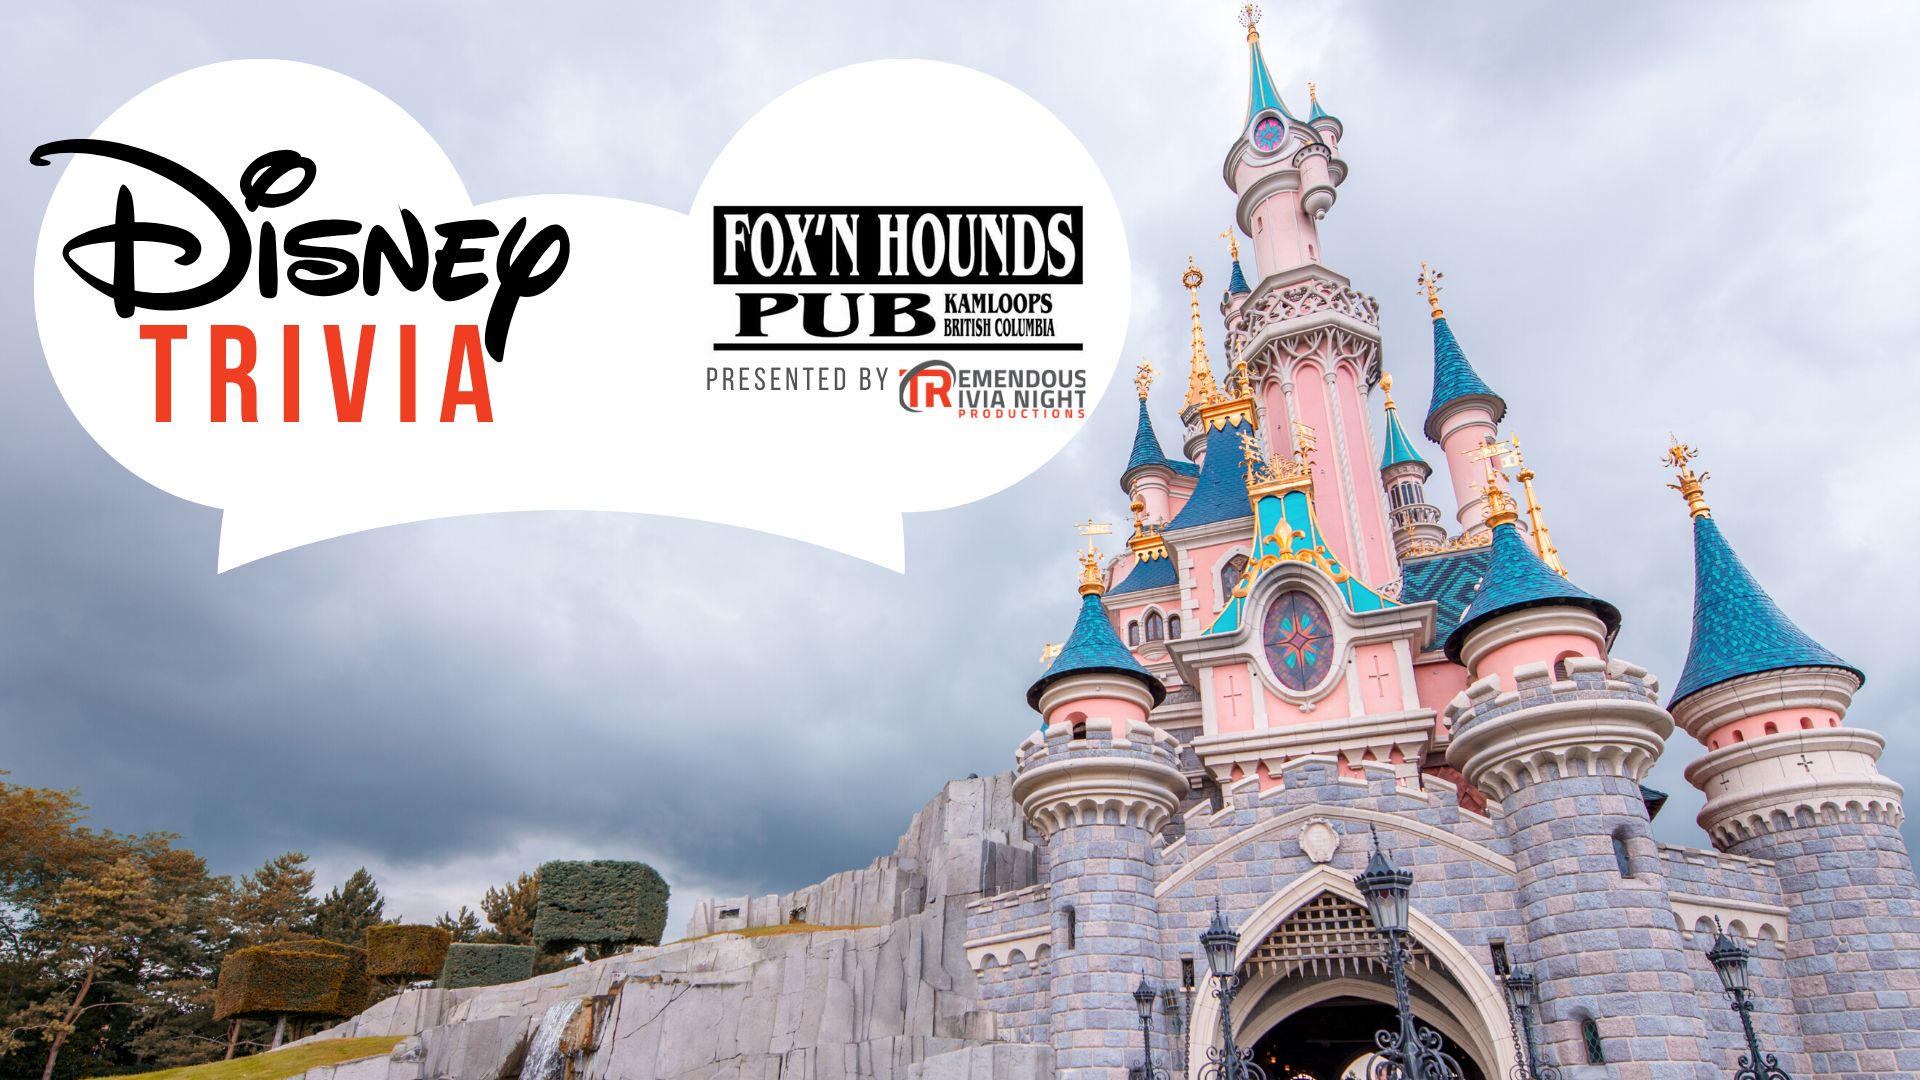 Fox'n Hounds Disney trivia